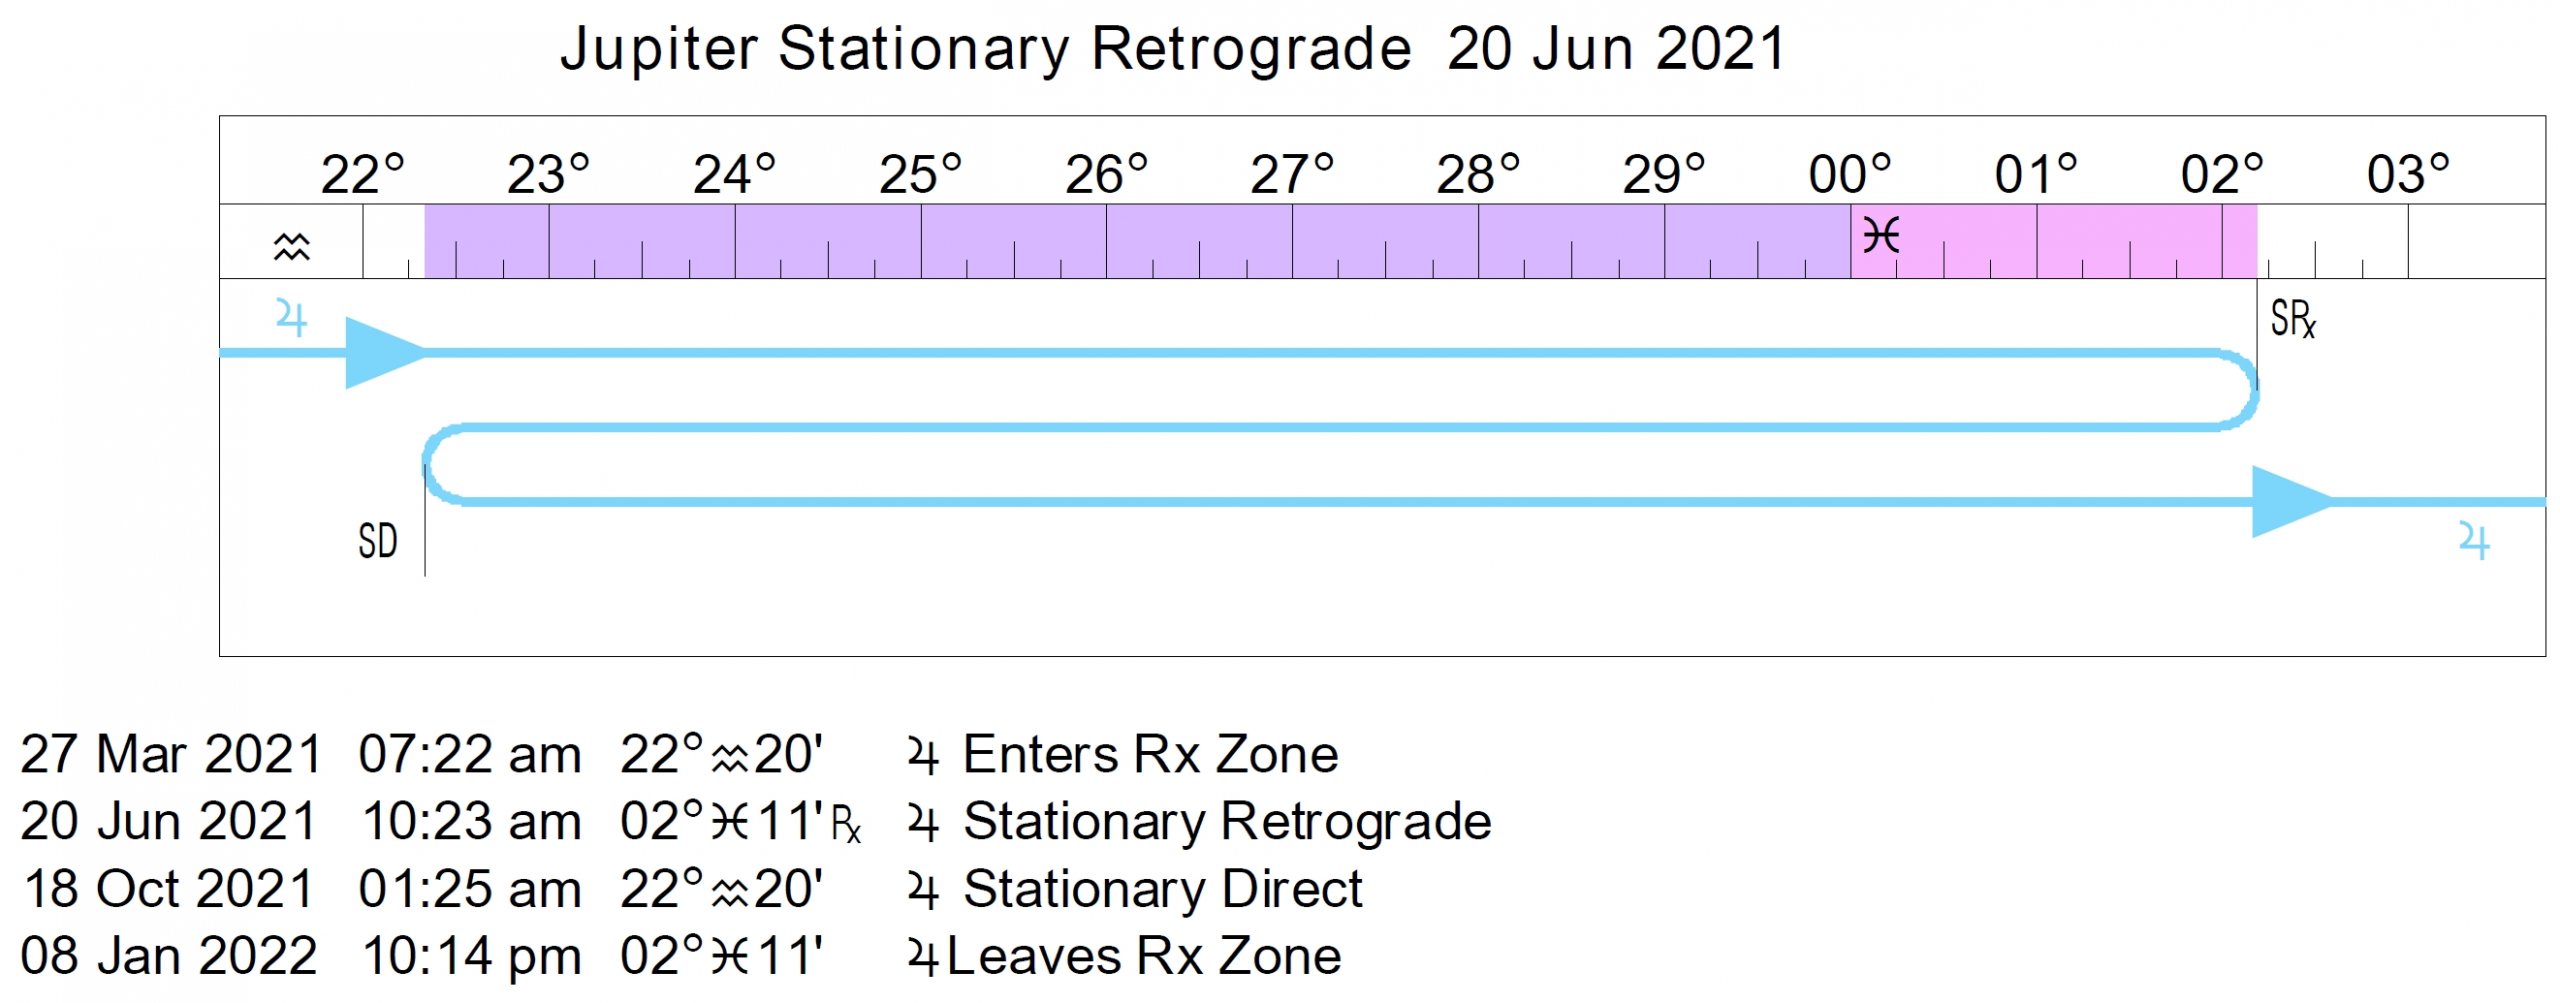 retrograde cycles/stations